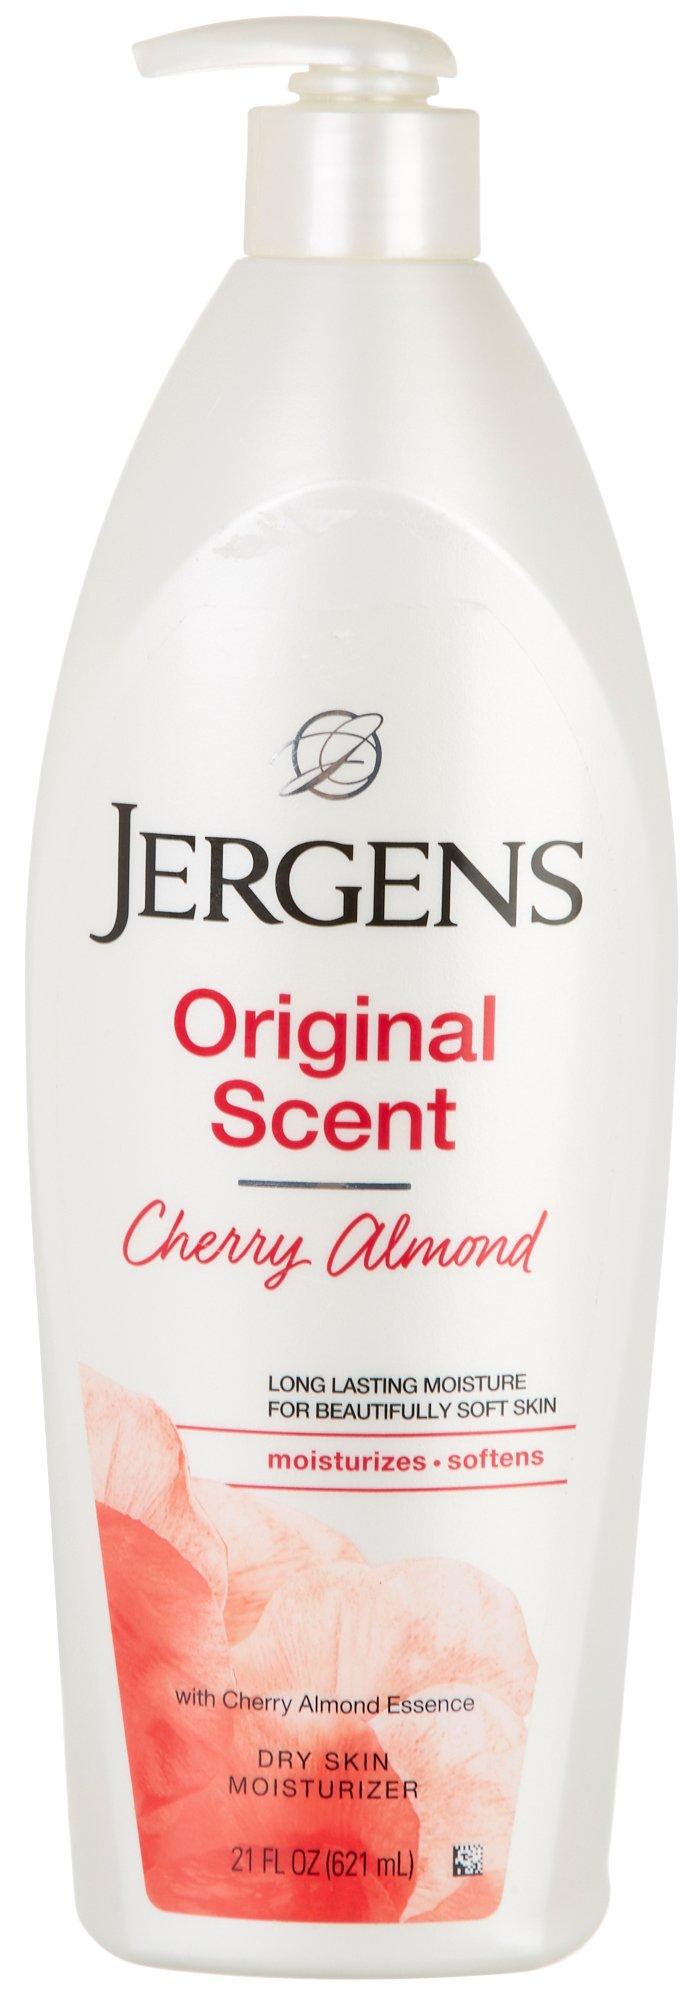 Original Scent Cherry Almond Dry Skin Moisturizer